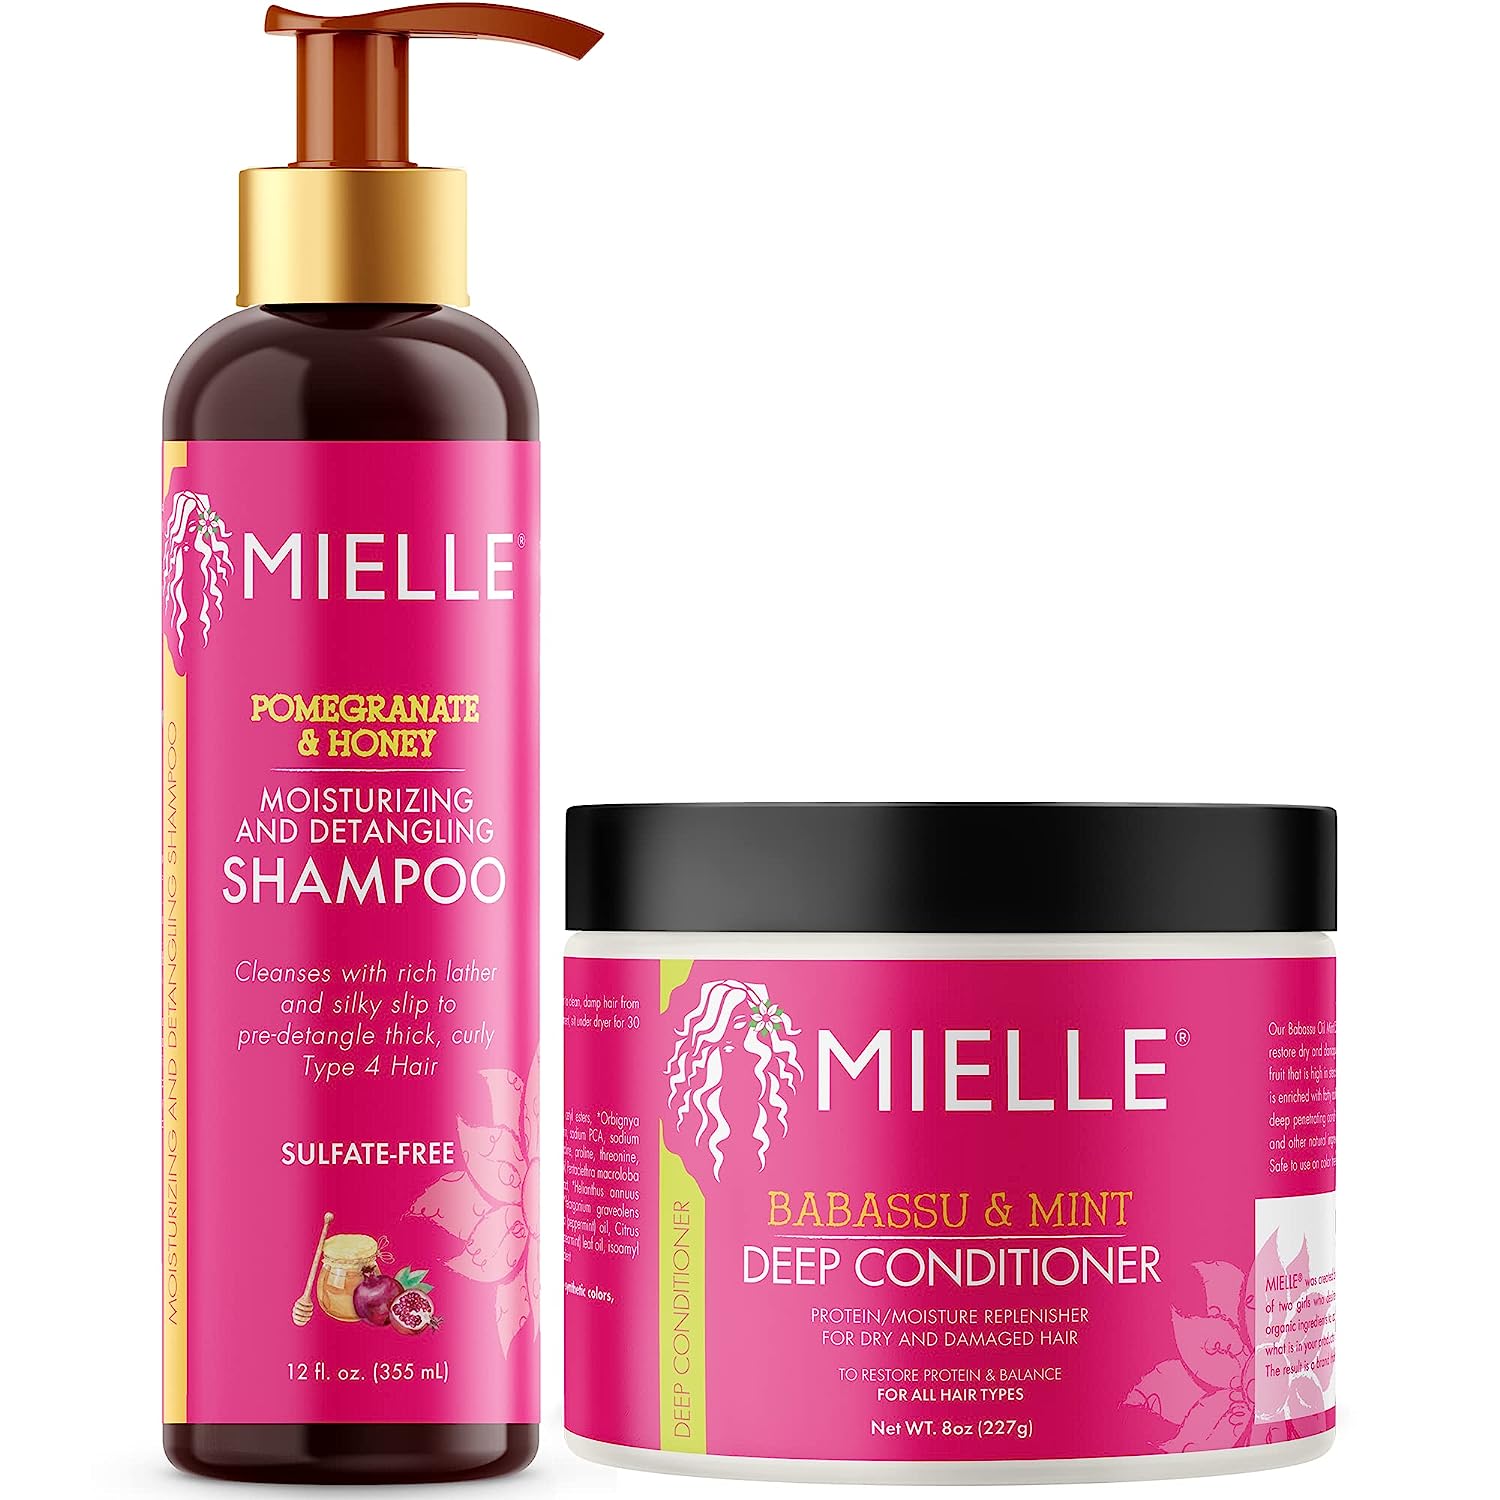 Mielle Organics Pomegranate & Honey Moisturizing and Detangling Shampoo and Babassu & Mint Deep Conditioner